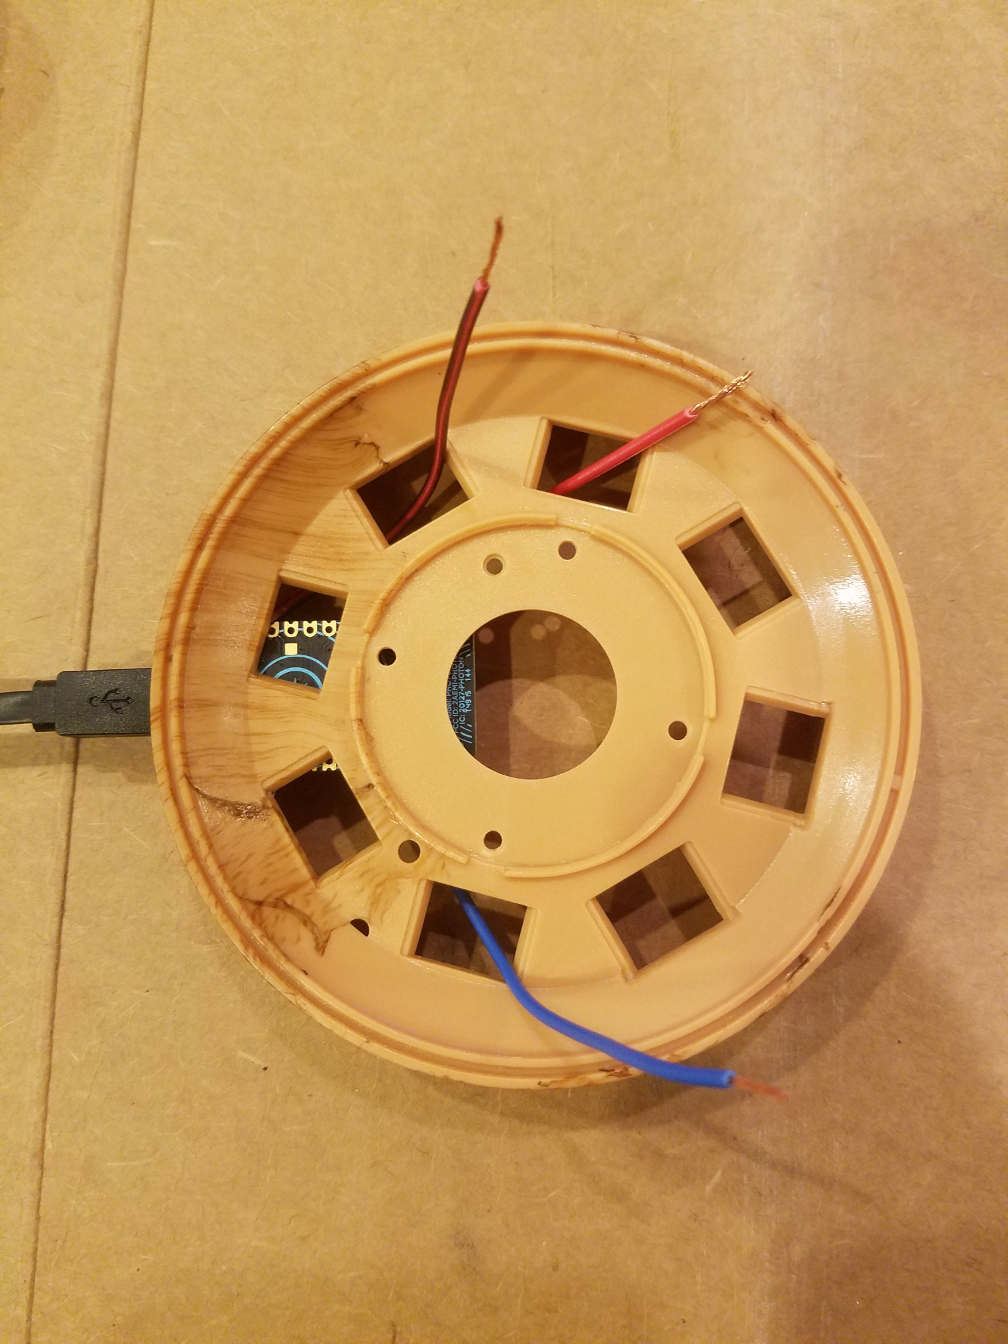 Wires thread through lamp base